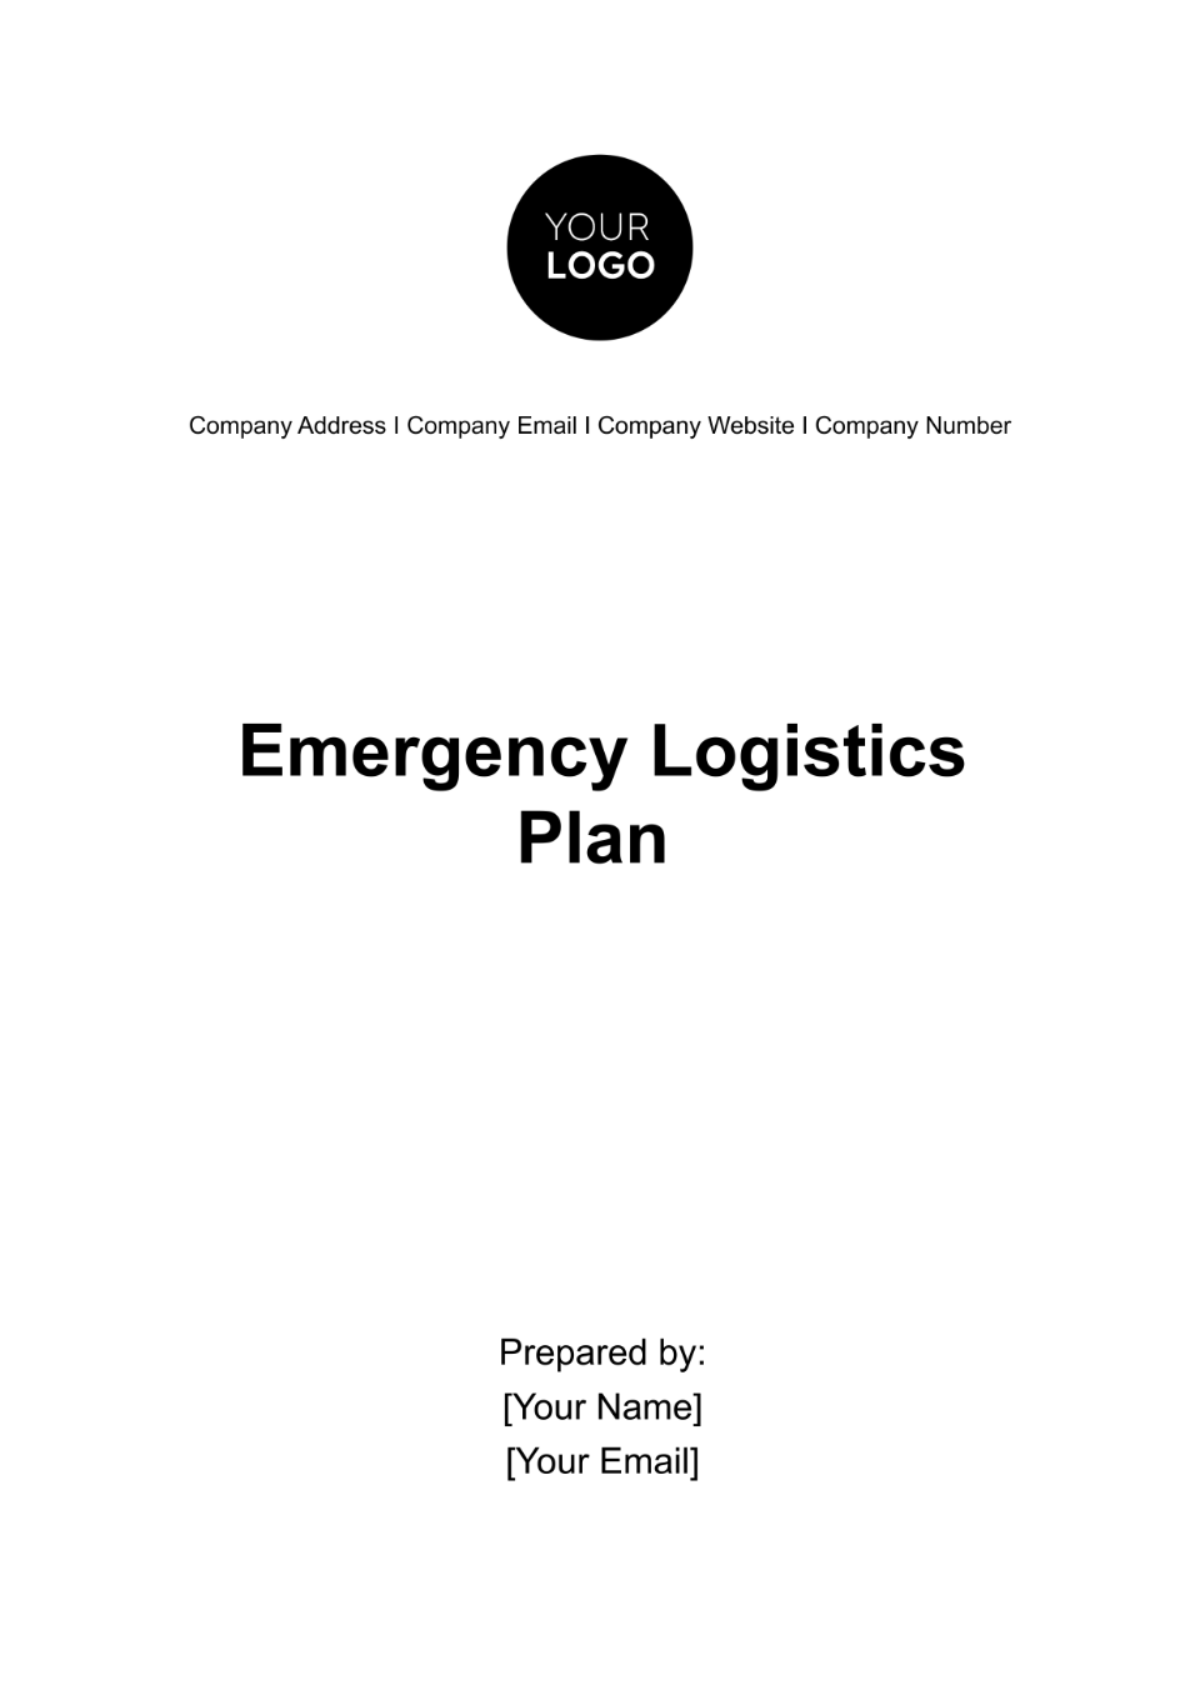 Emergency Logistics Plan Template